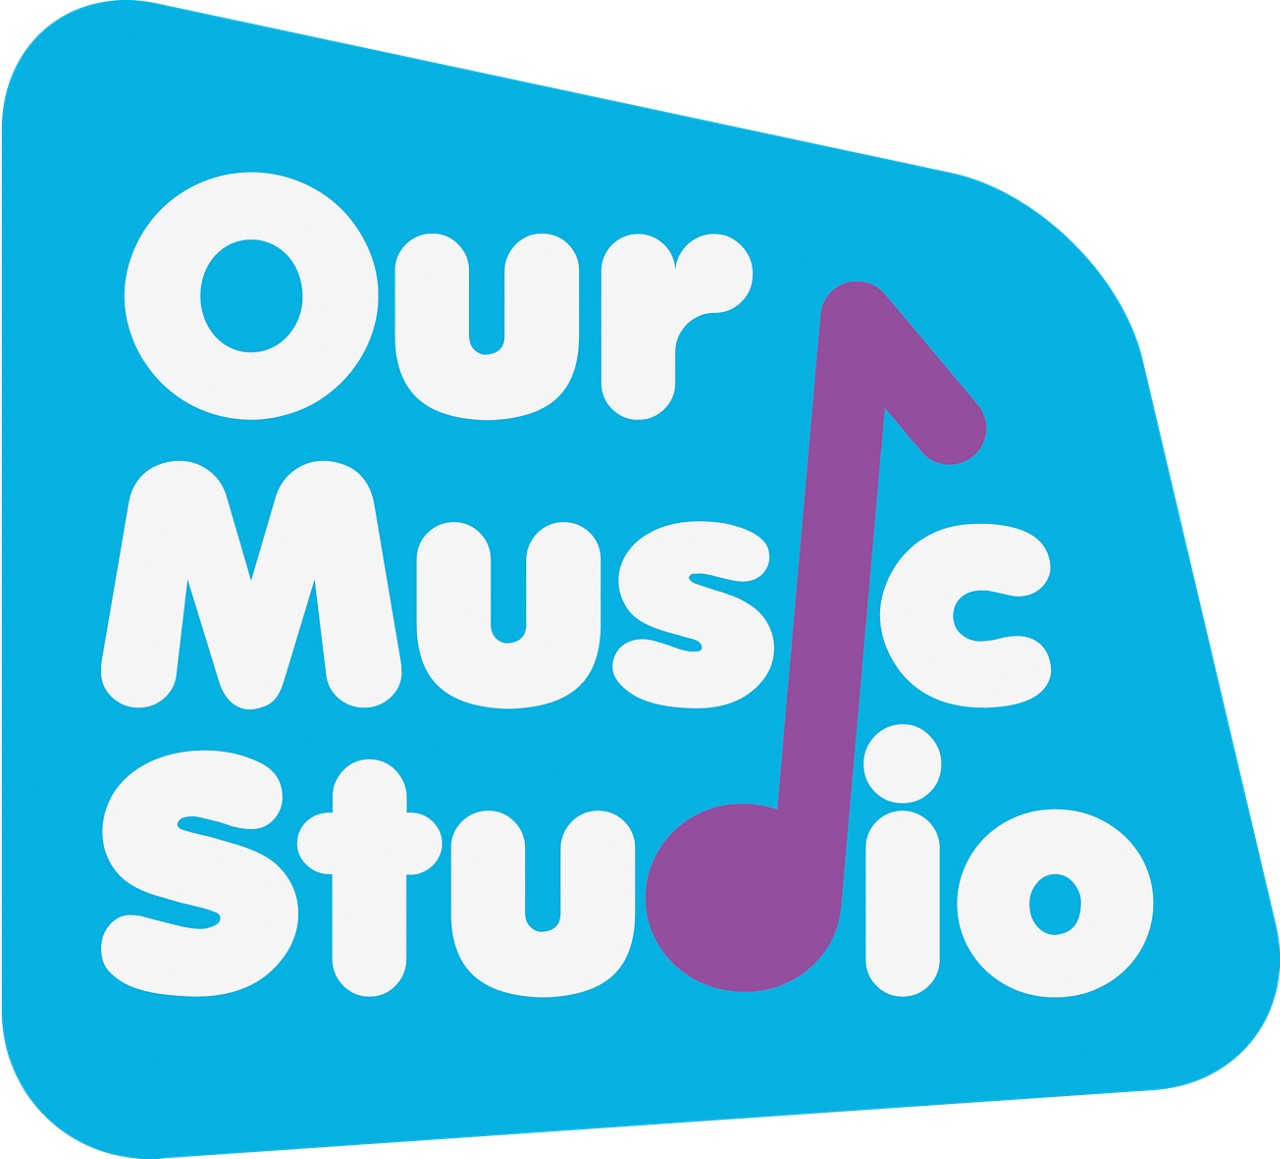 Partners ourmusicstudio logo